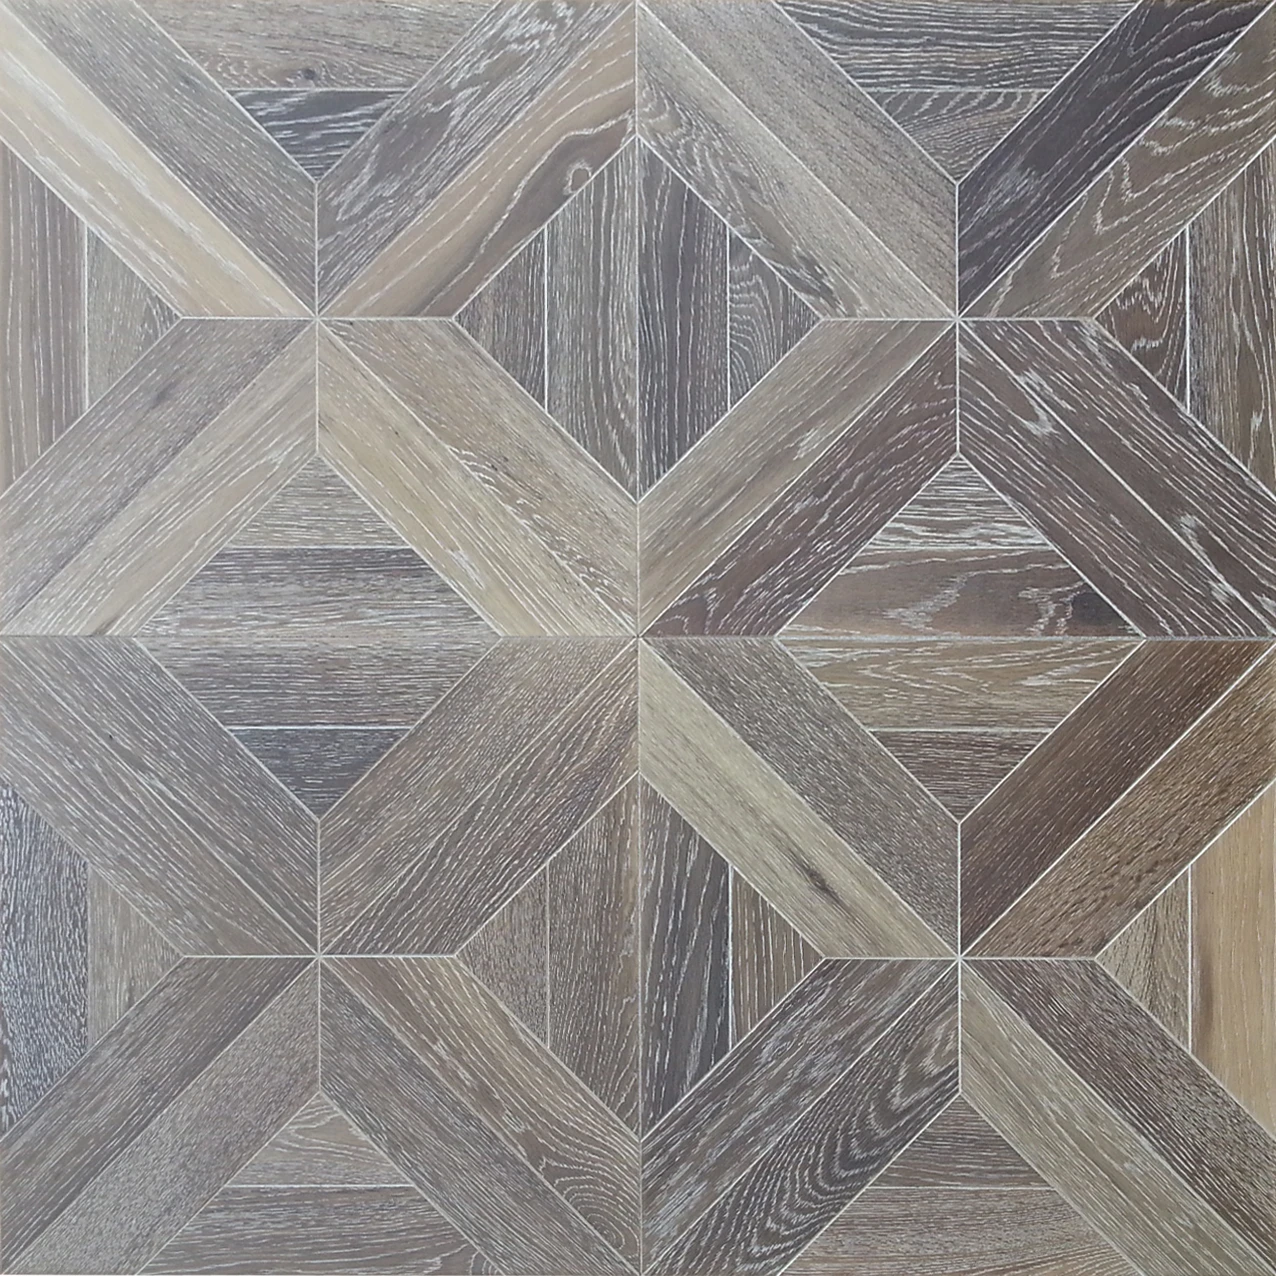 Tile Parquet Flooring/floor Wood Grid Fudeli Mosaic Black and White Oak Flooring Apartment Modern Indoor 15mm More Than 5 Years